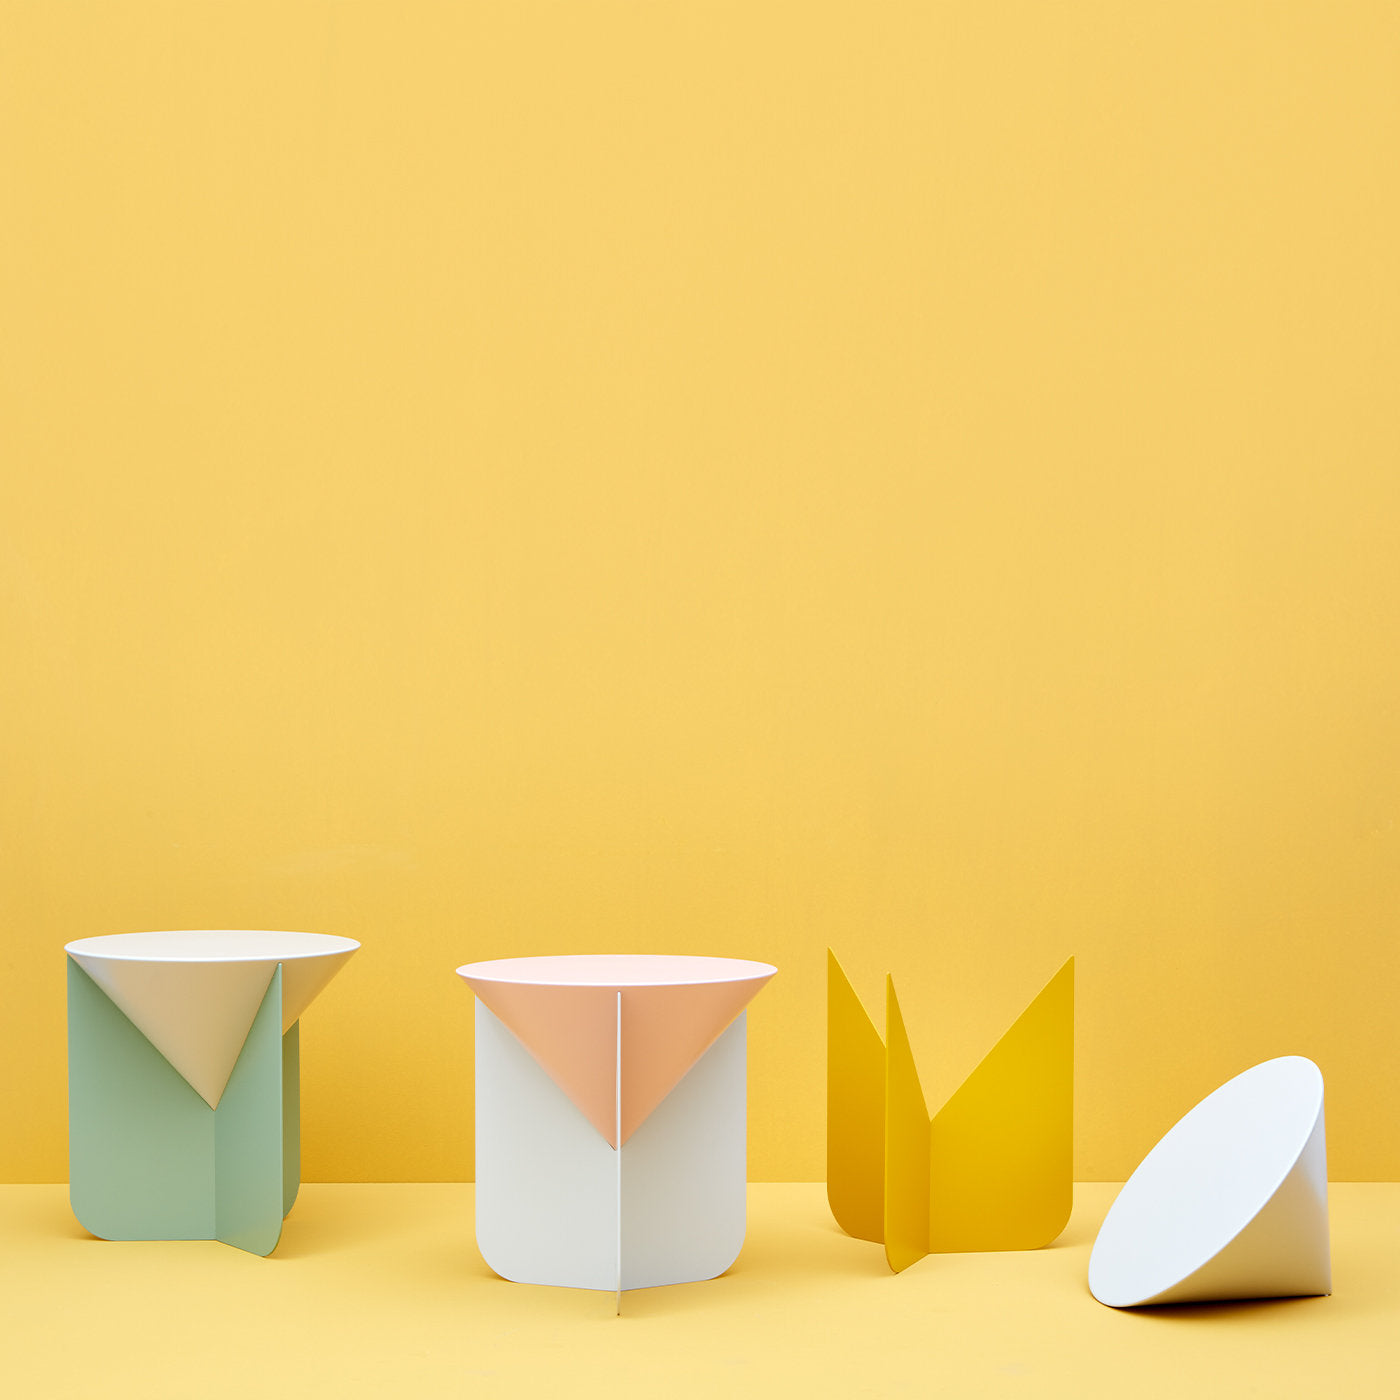 Cone White and Green Side Table by Matteo Zorzenoni - Alternative view 1